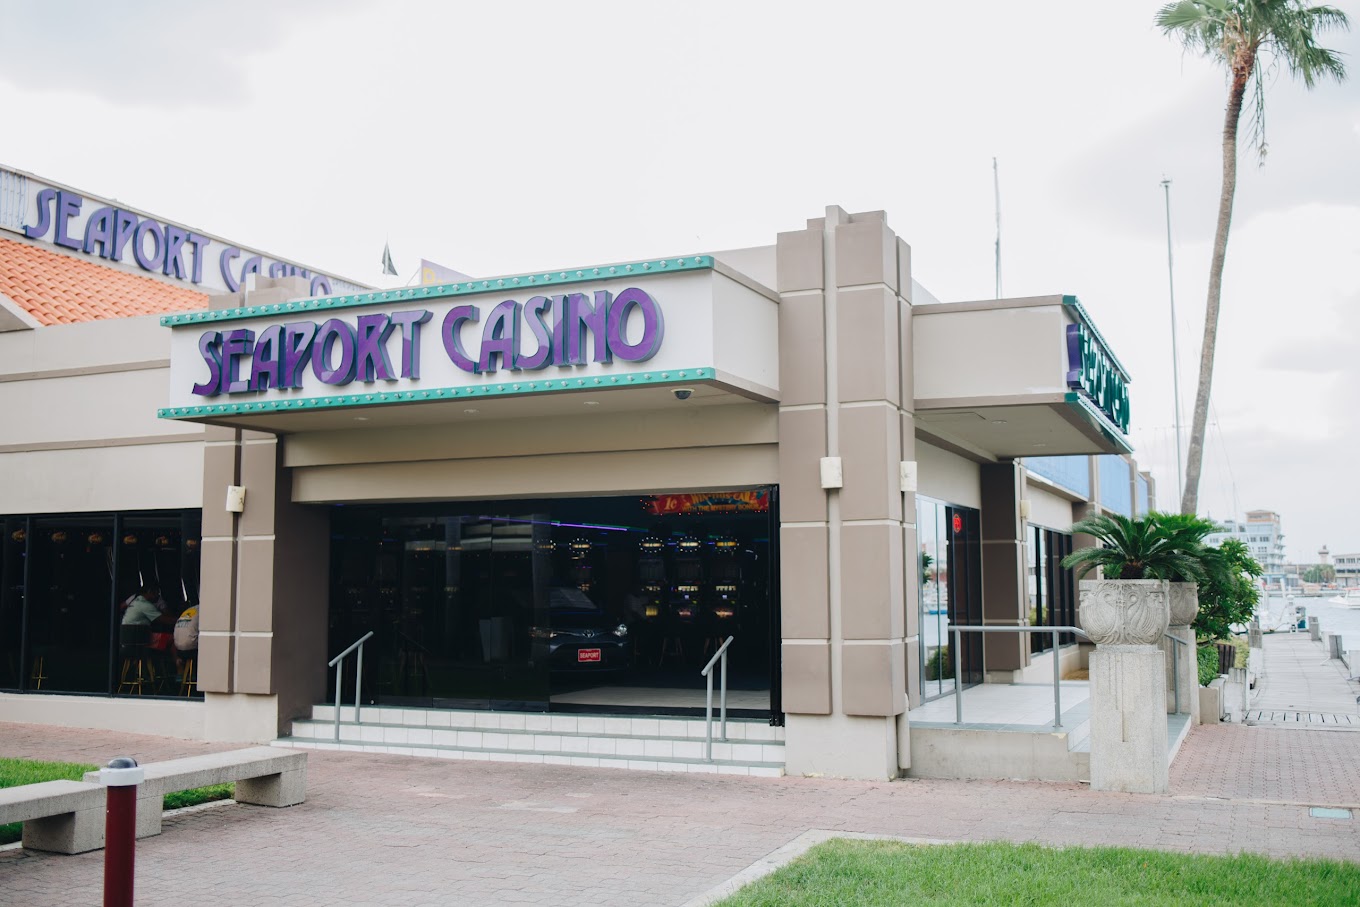 Wind Creek Seaport Casino